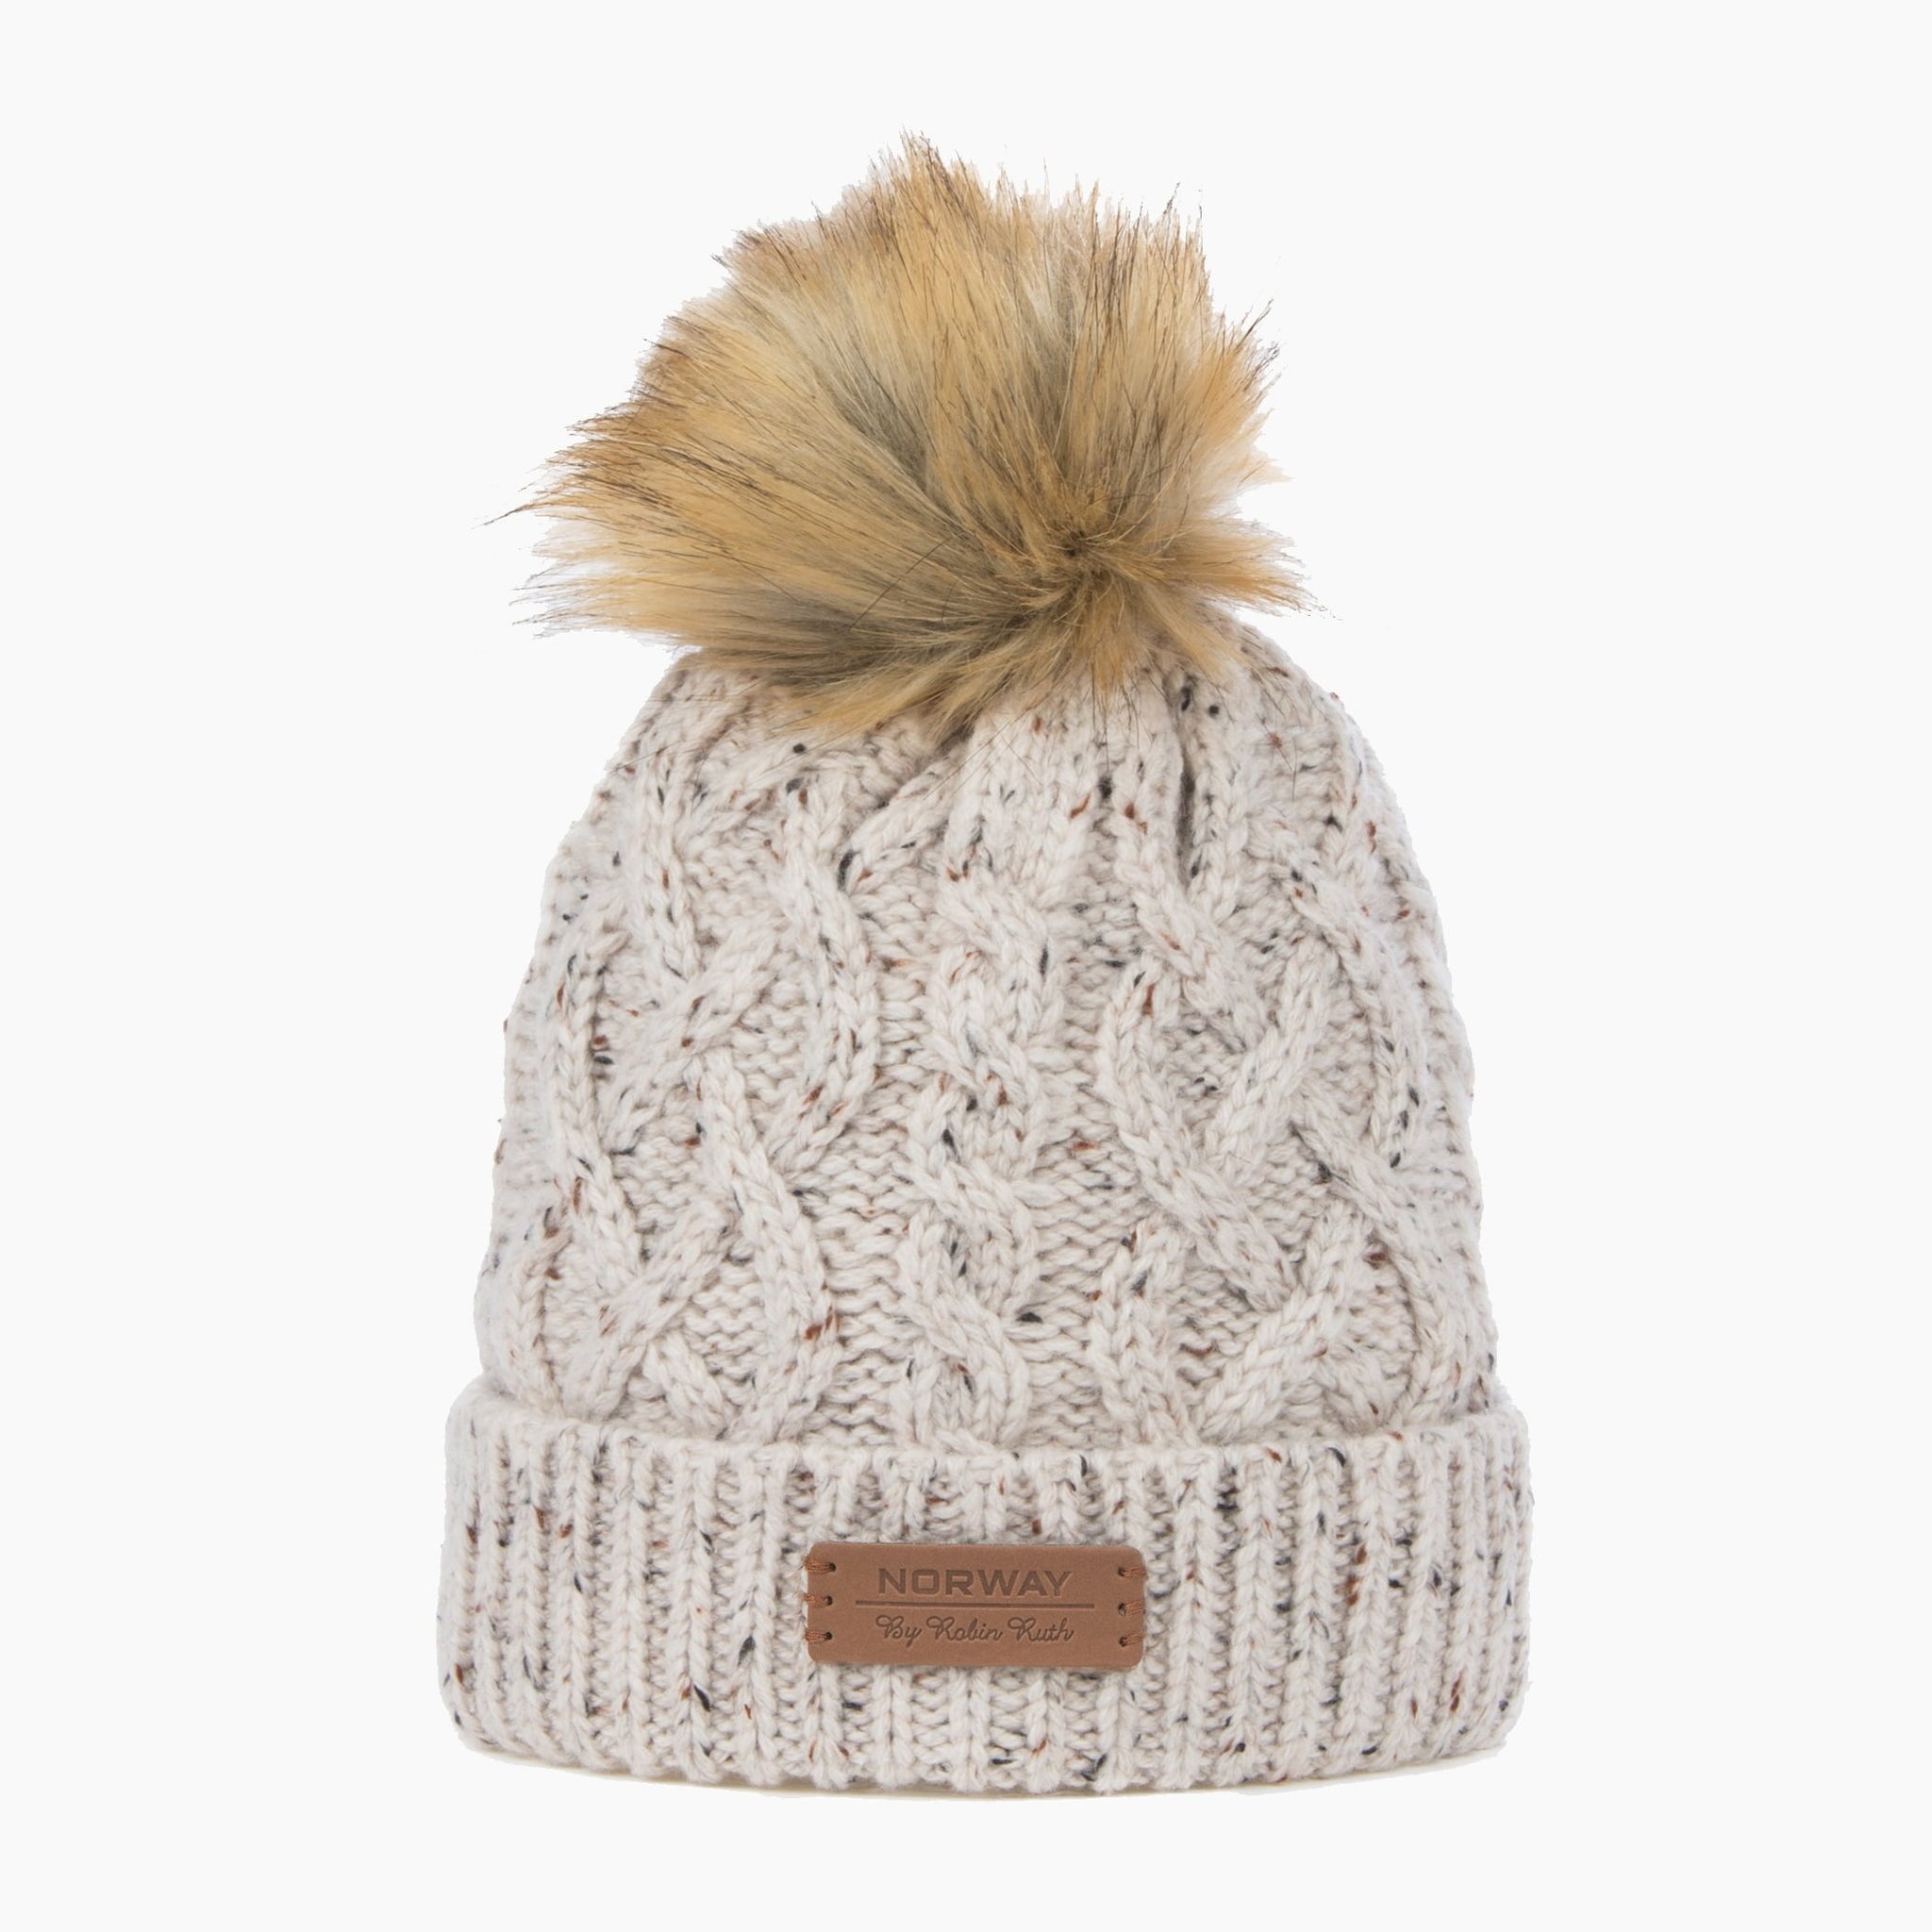 Copenhagen Winter hat - Robin Ruth